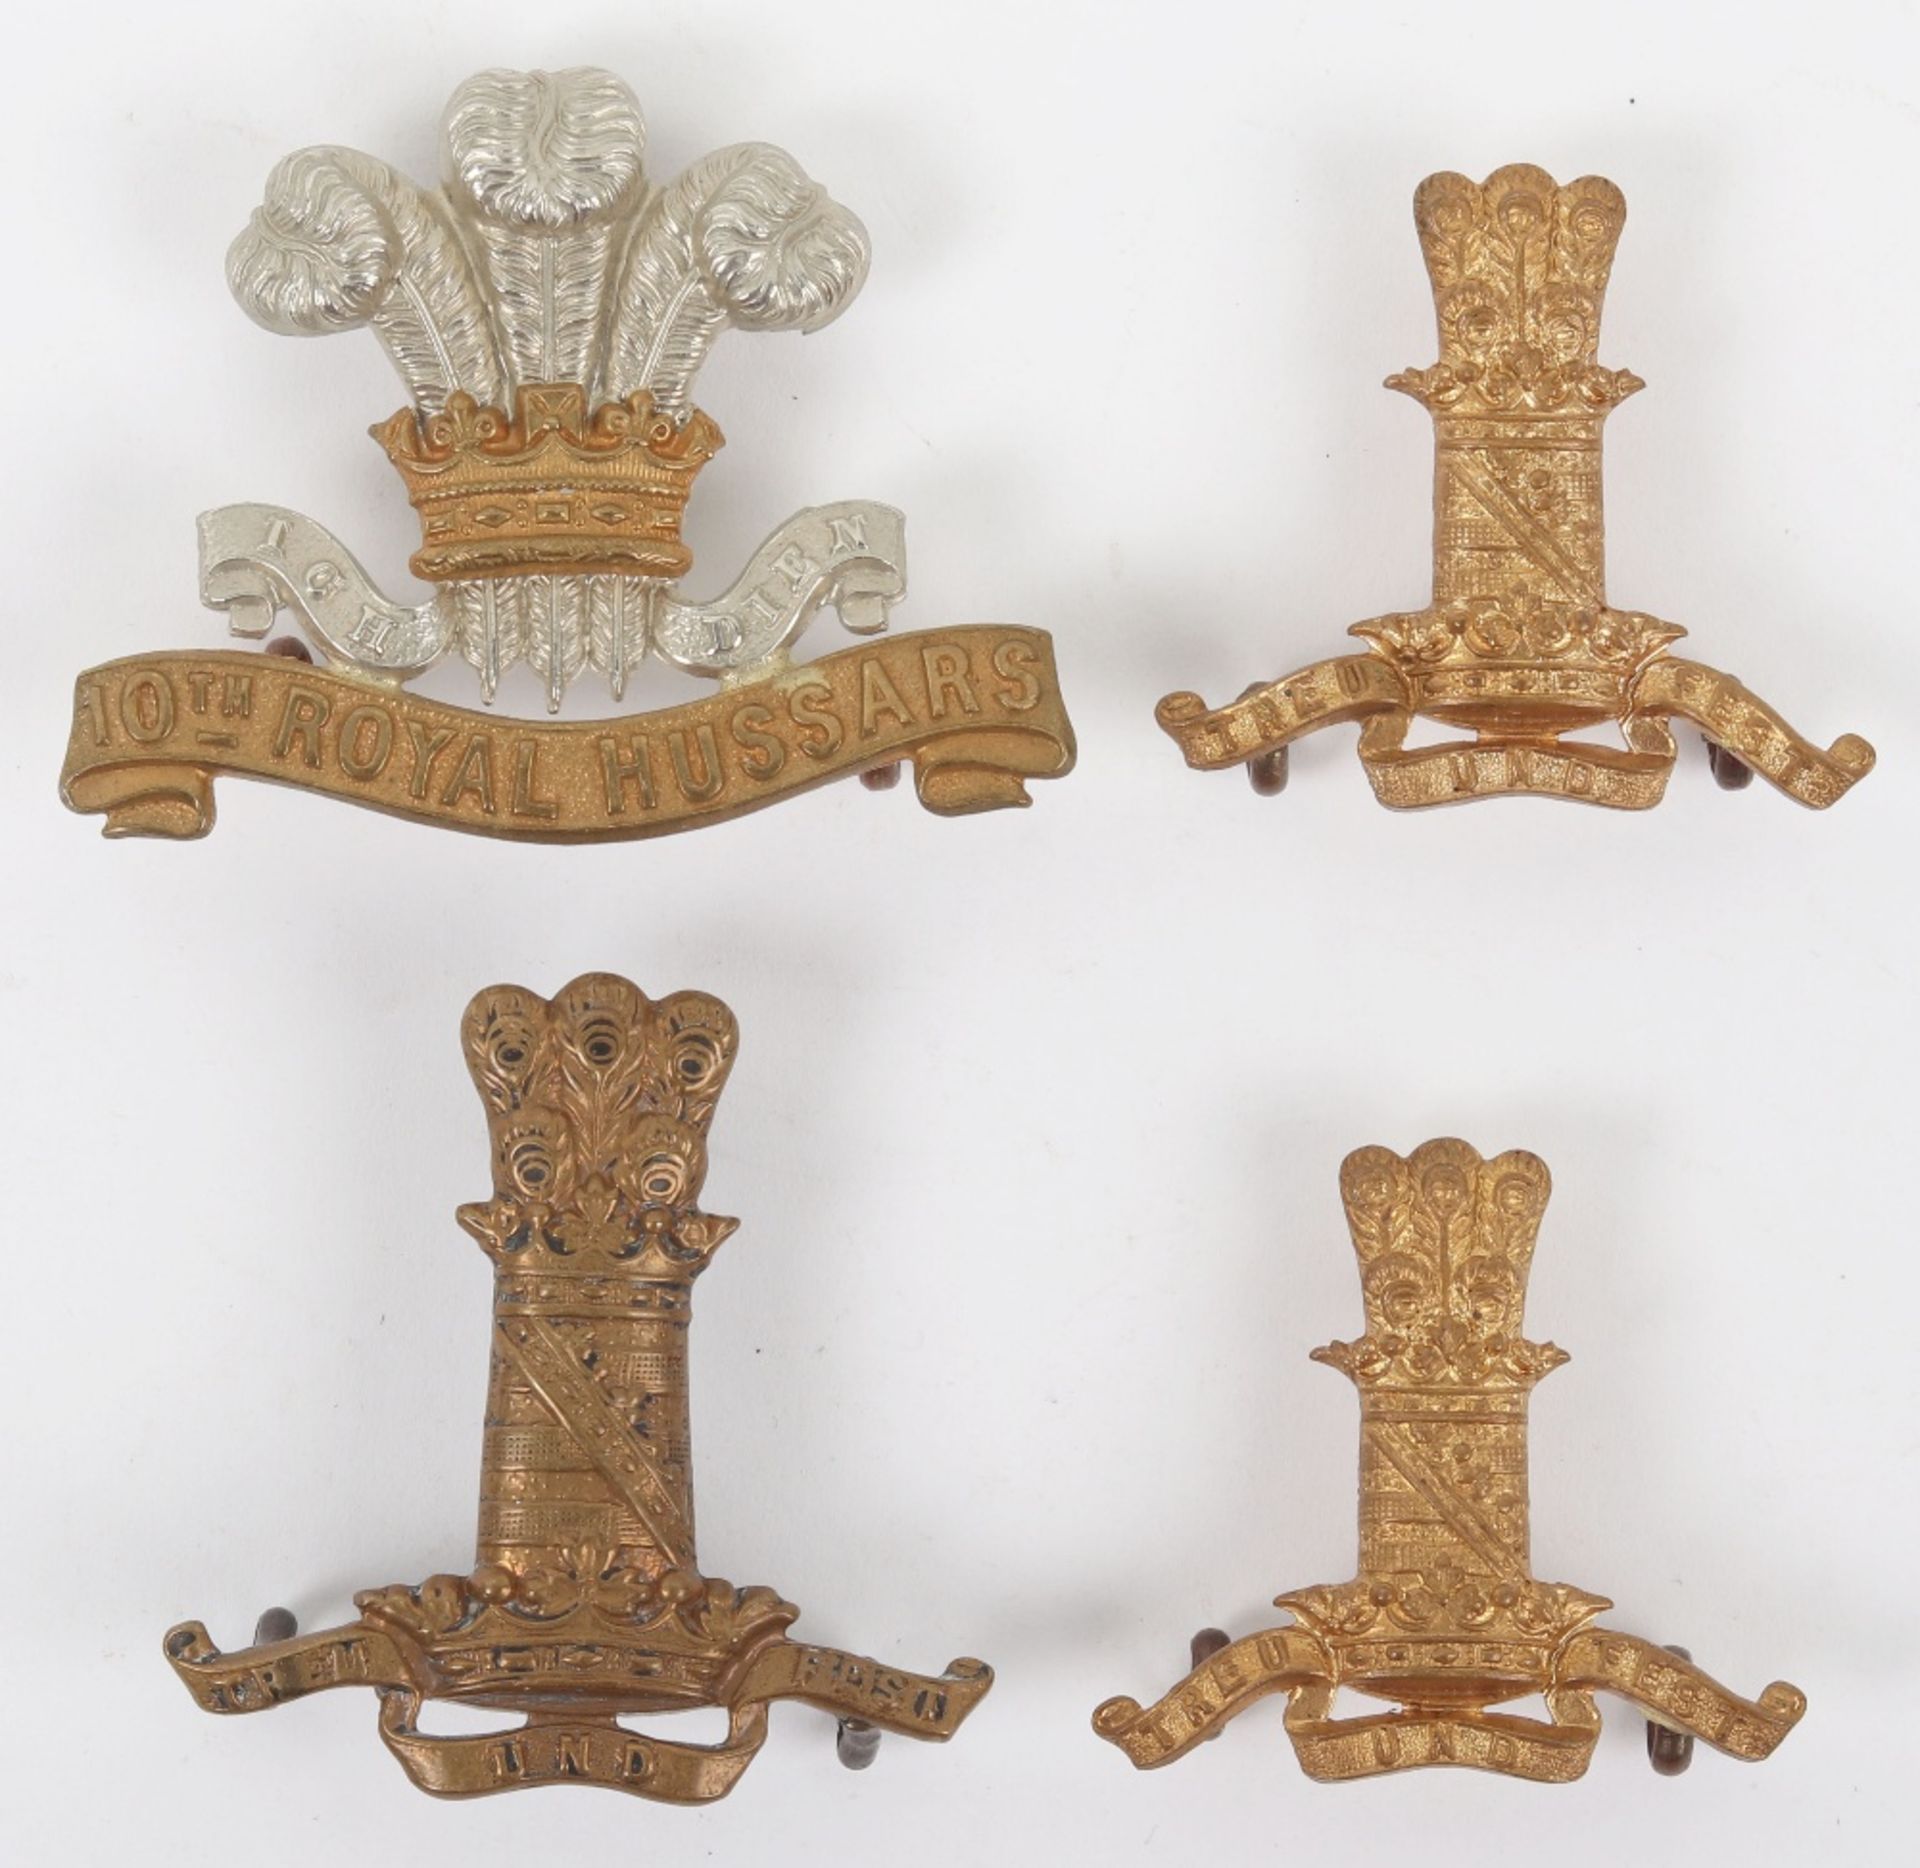 Victorian 10th Royal Hussars Cap Badge